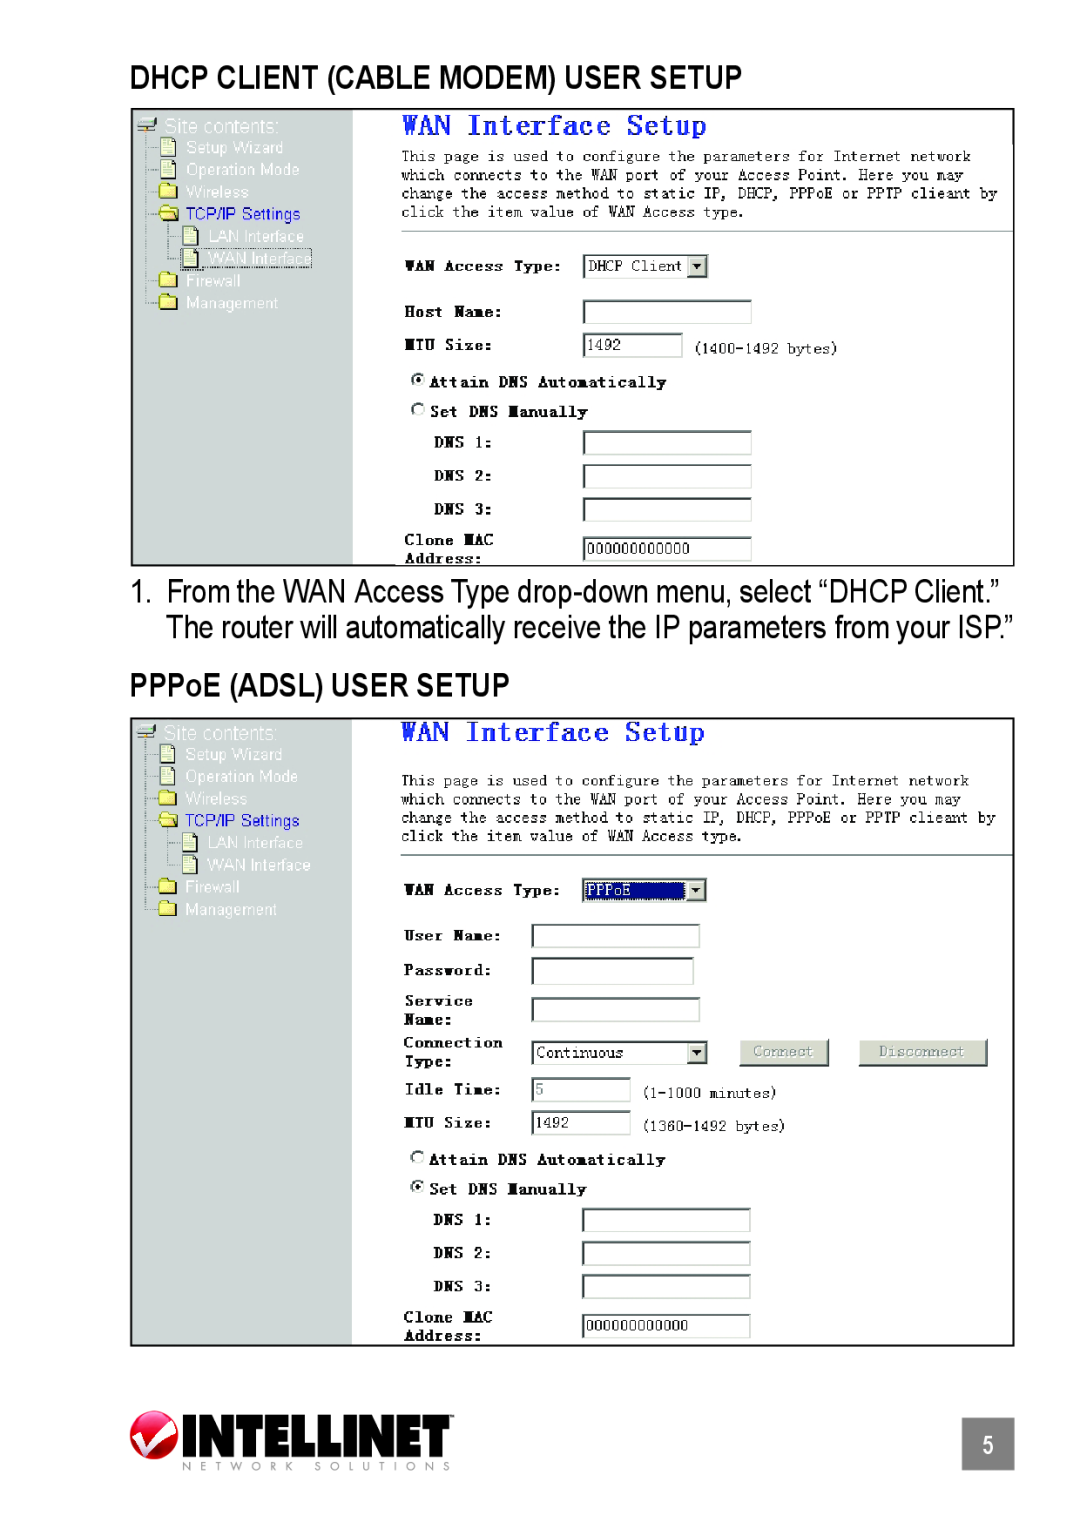 Intellinet Network Solutions 503693 manual Dhcp Client Cable Modem User Setup, PPPoE ADSL USER SETUP 